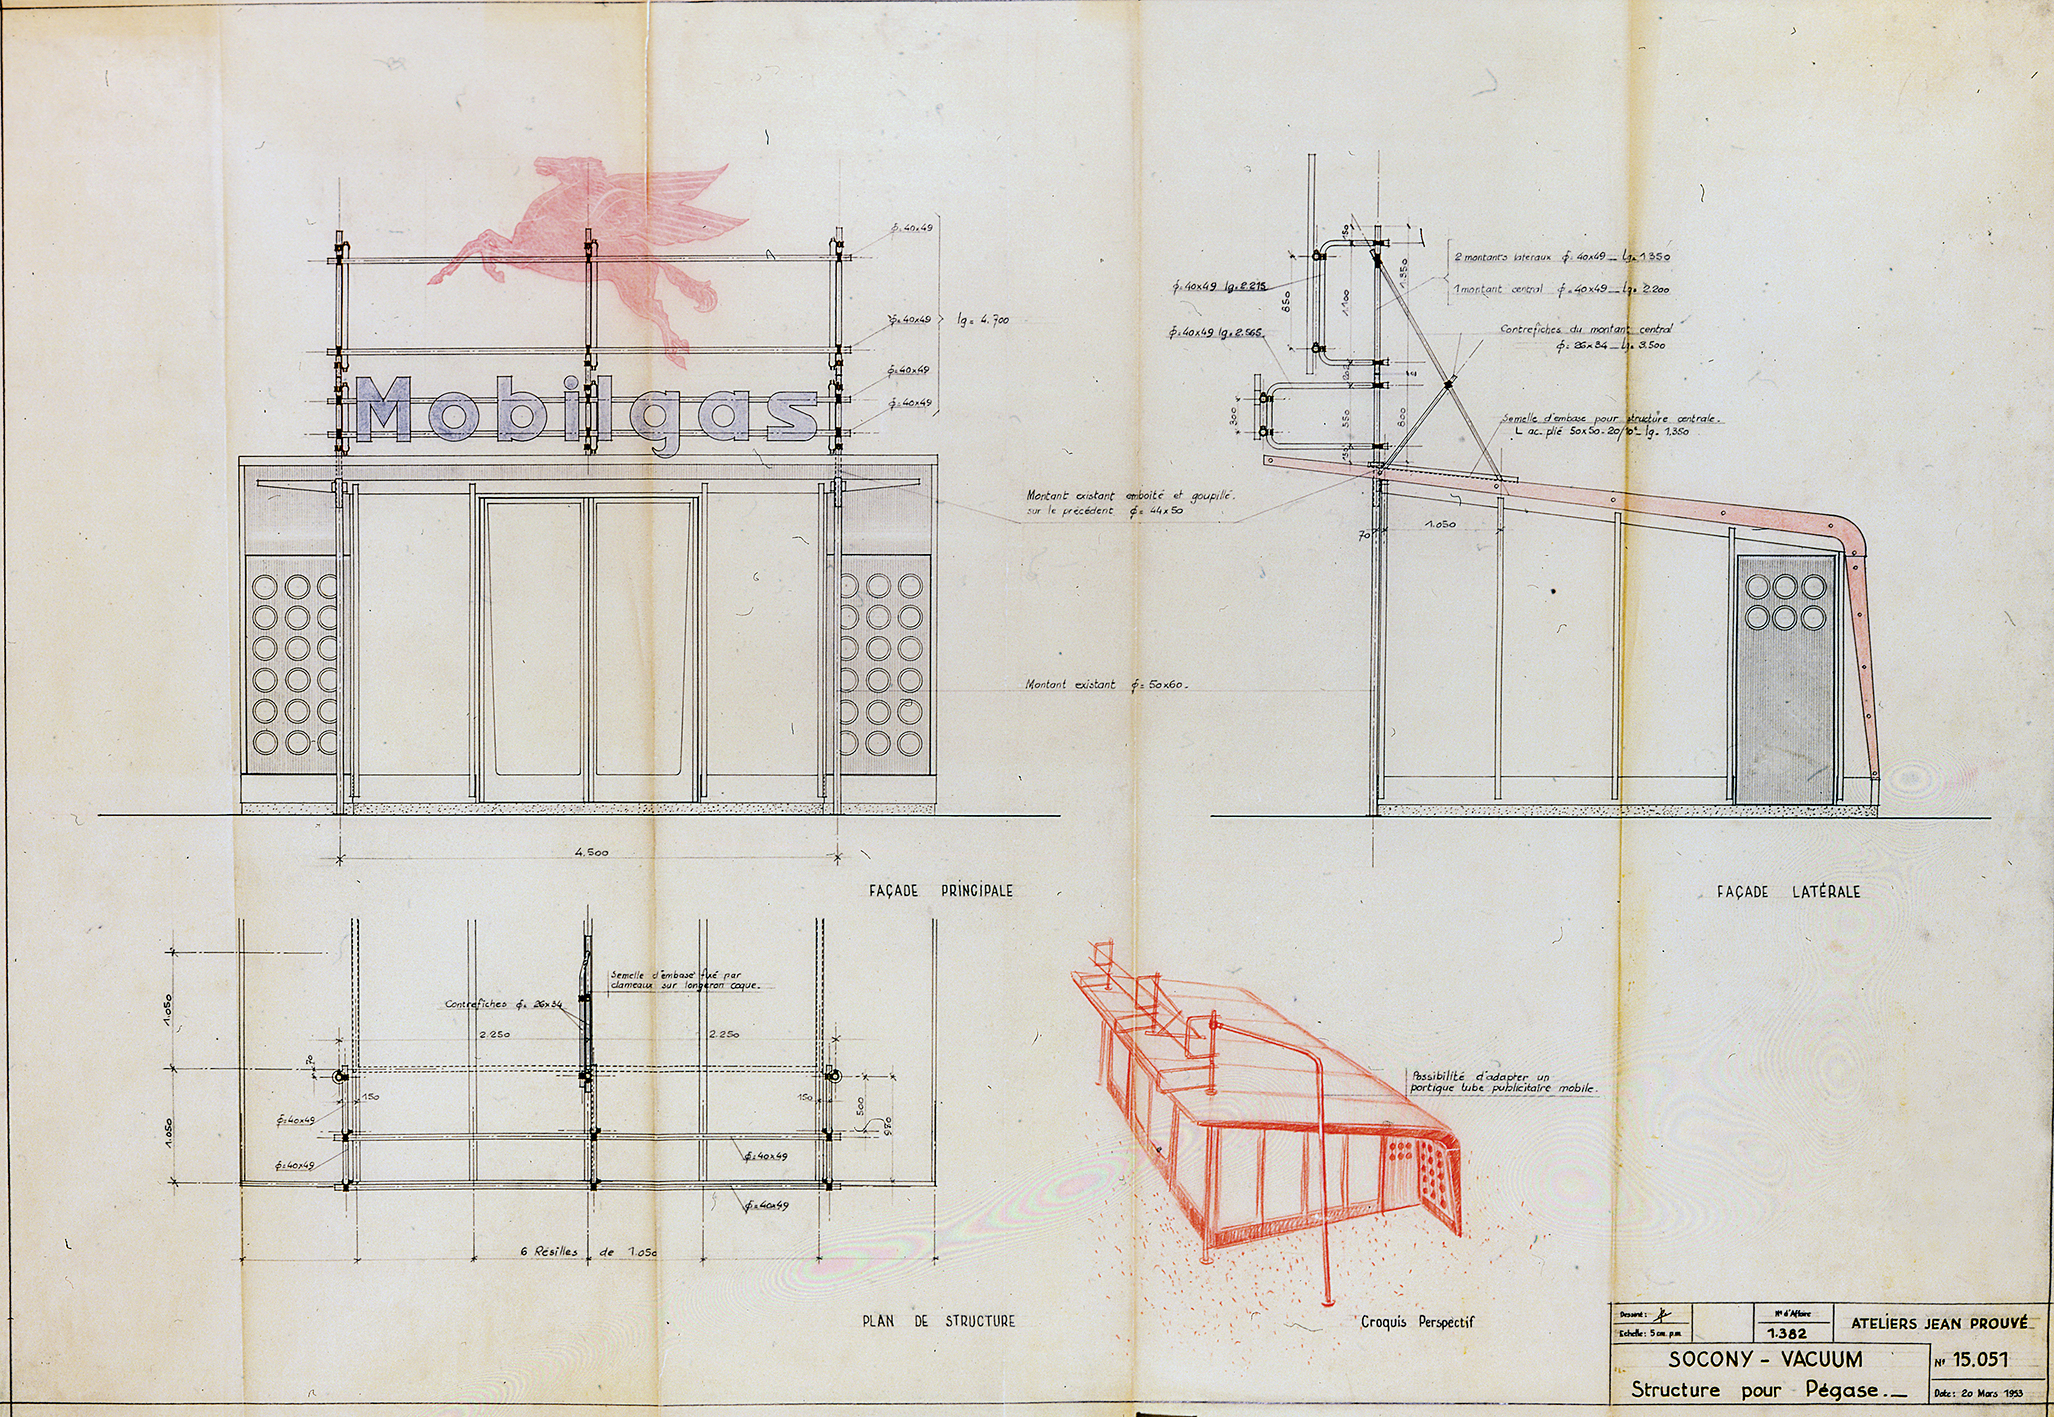 Ateliers Jean Prouvé, “Socony-Vacuum, support structure for Pegasus”. Plan no. 15.051, 20 March 1953.